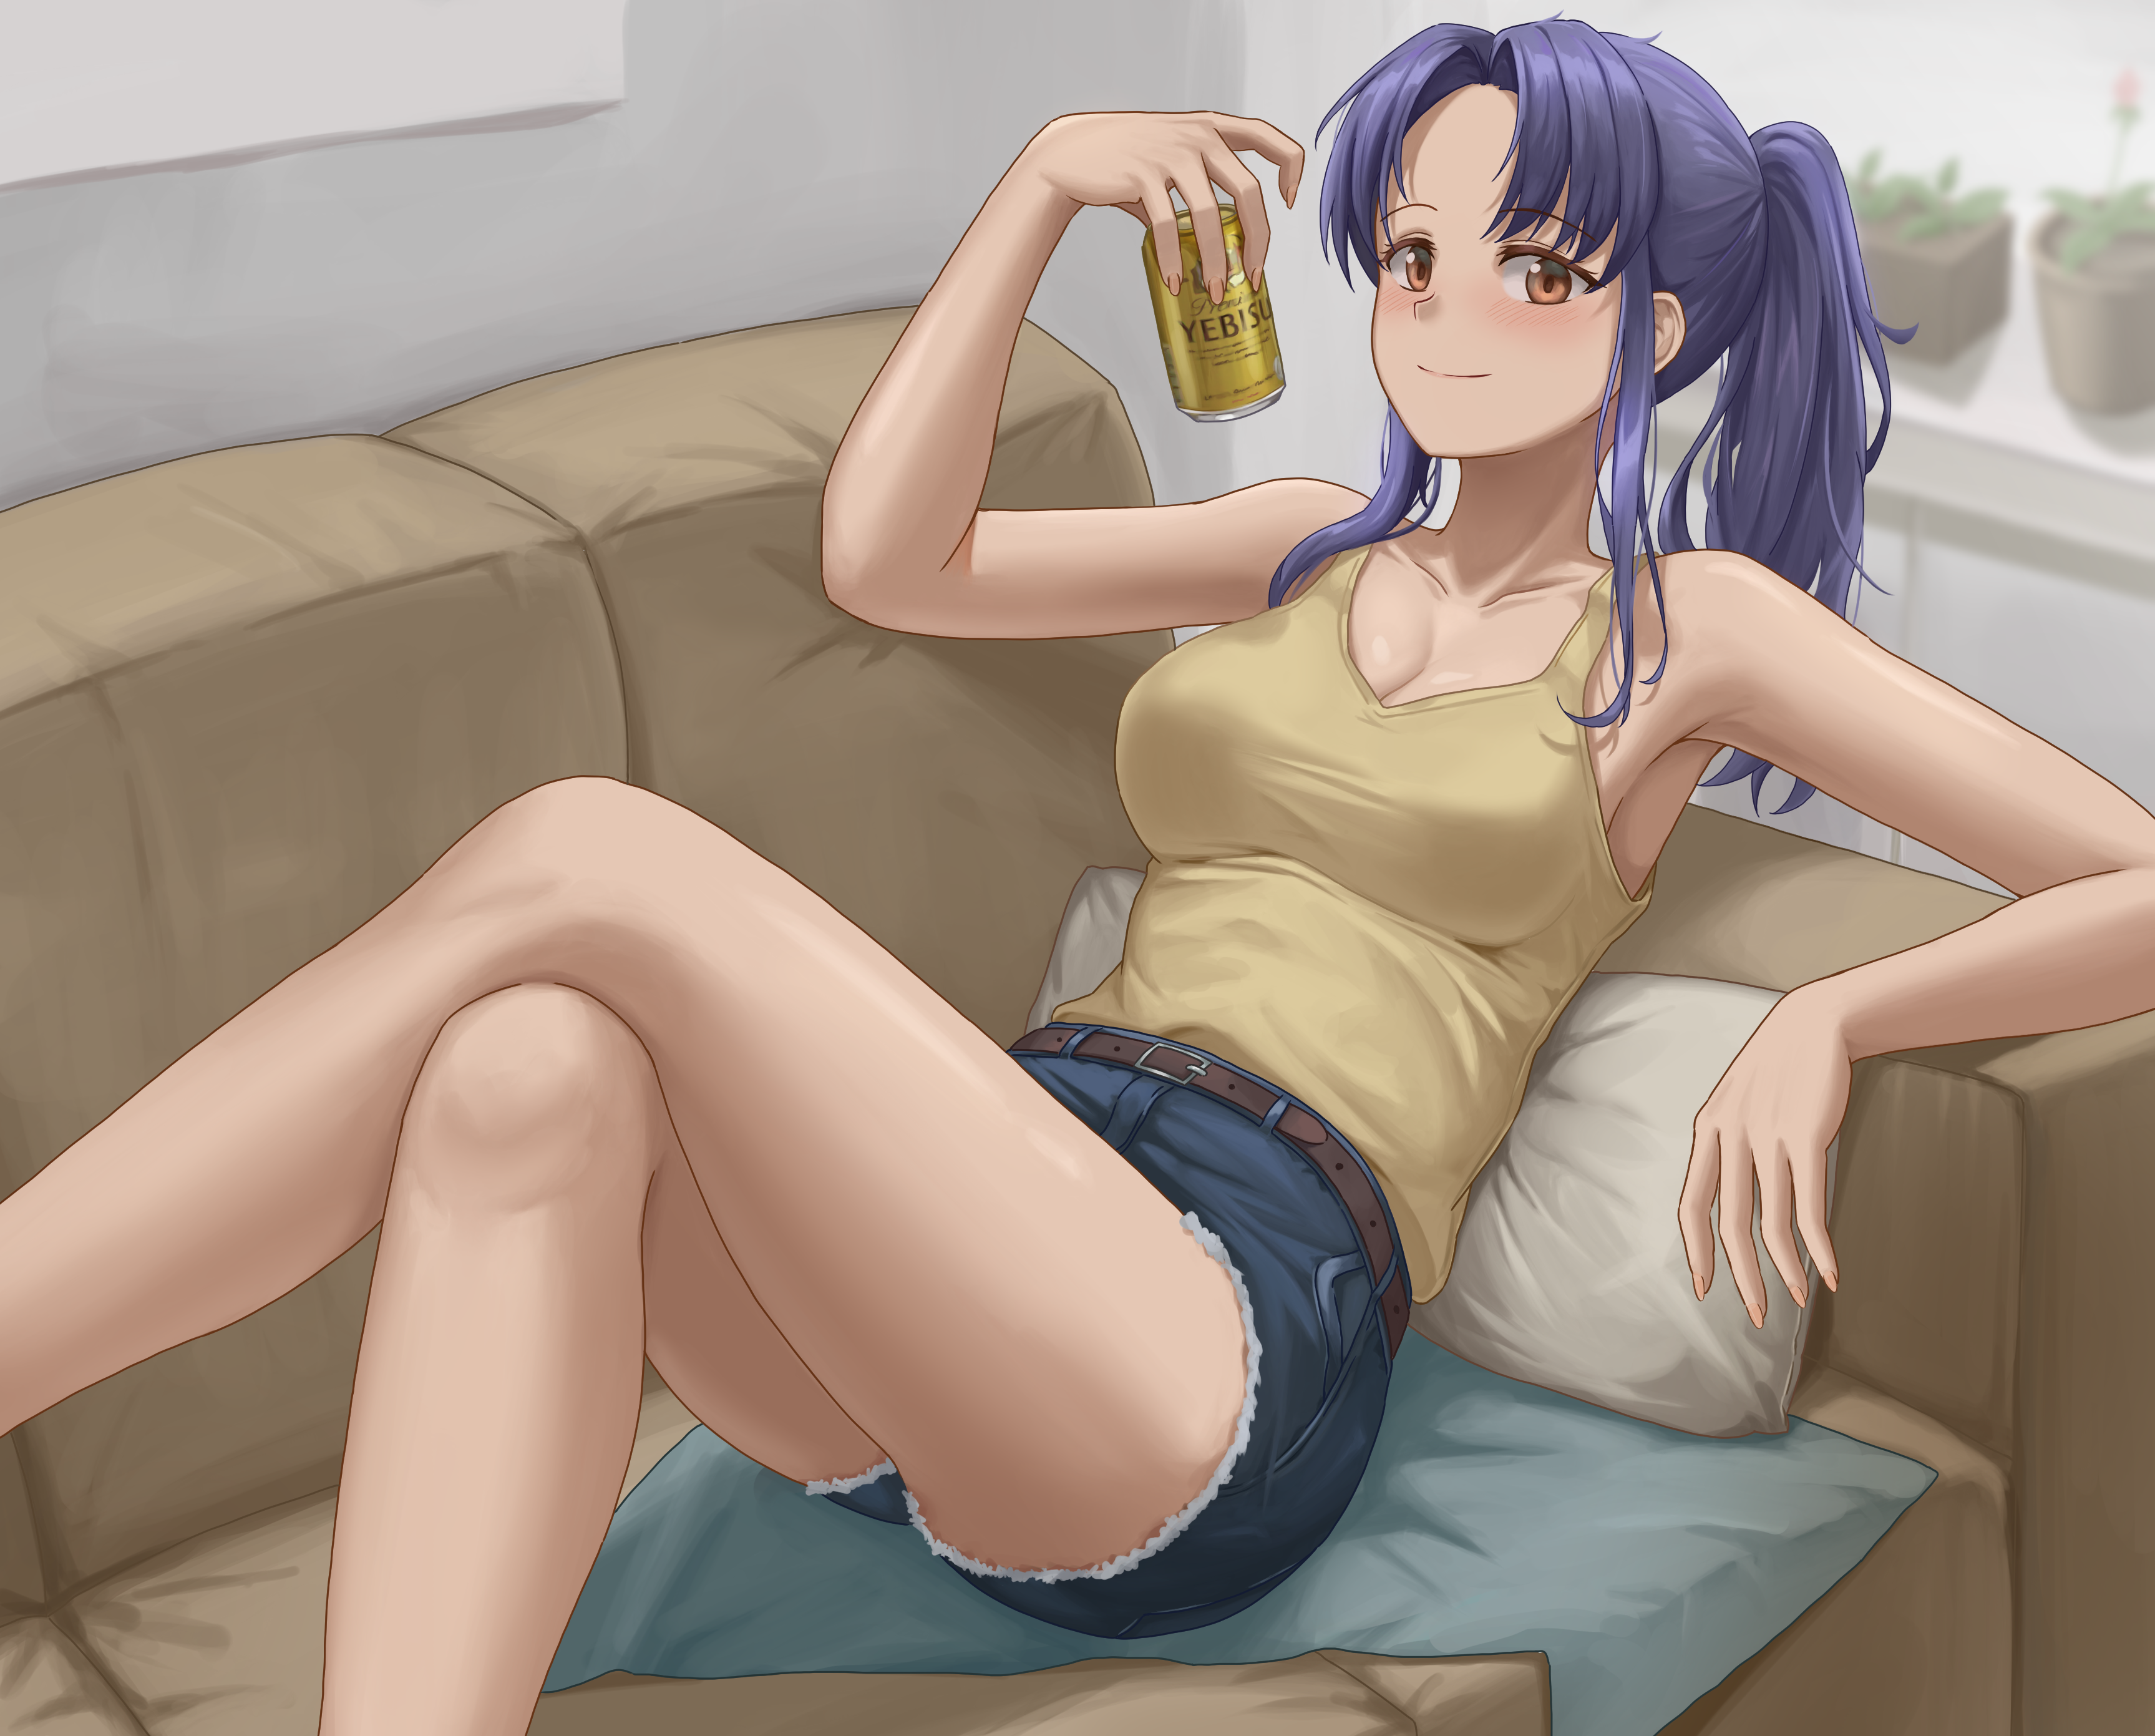 Anime Anime Girls Digital Digital Art Artwork 2D Looking At Viewer Shorts Couch Purple Hair Neon Gen 3454x2782